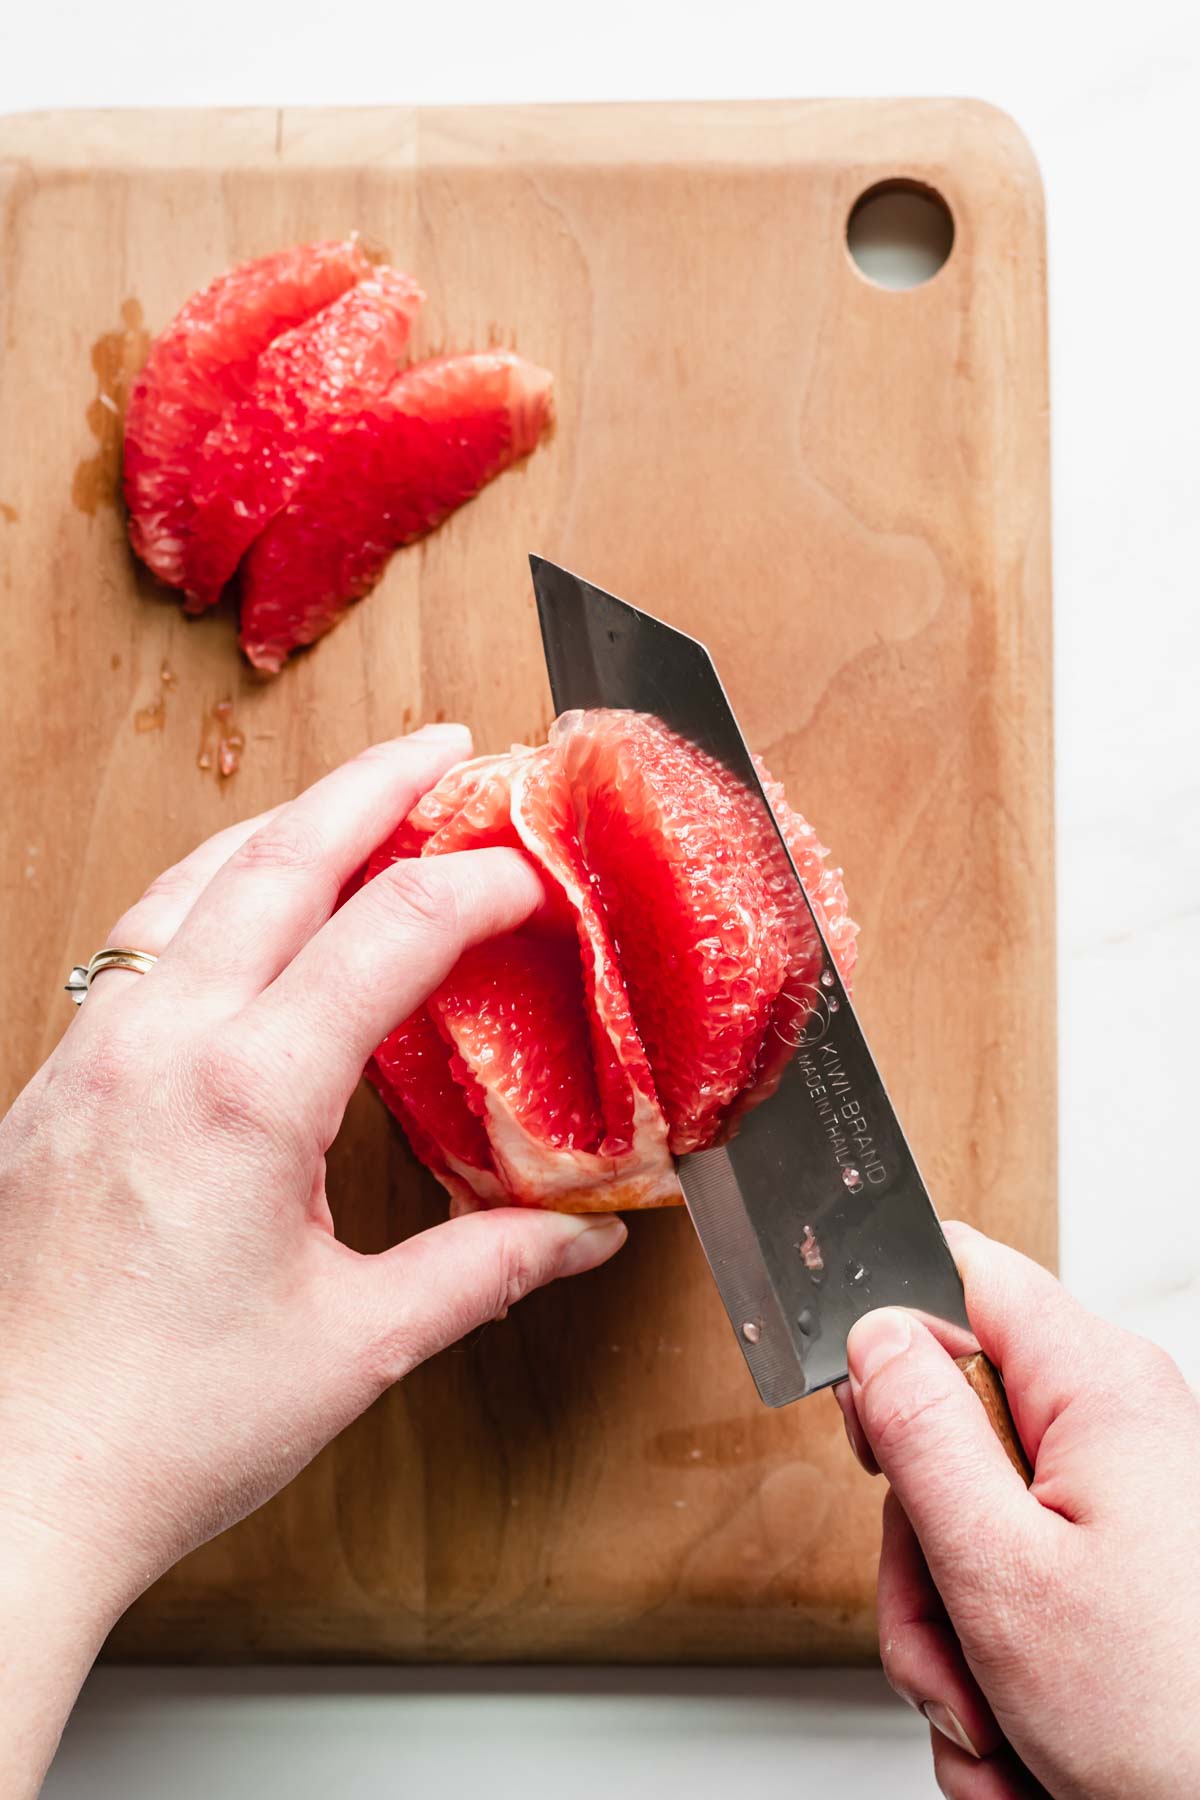 A knife cuts into a segment of grapefruit to create a garnish.